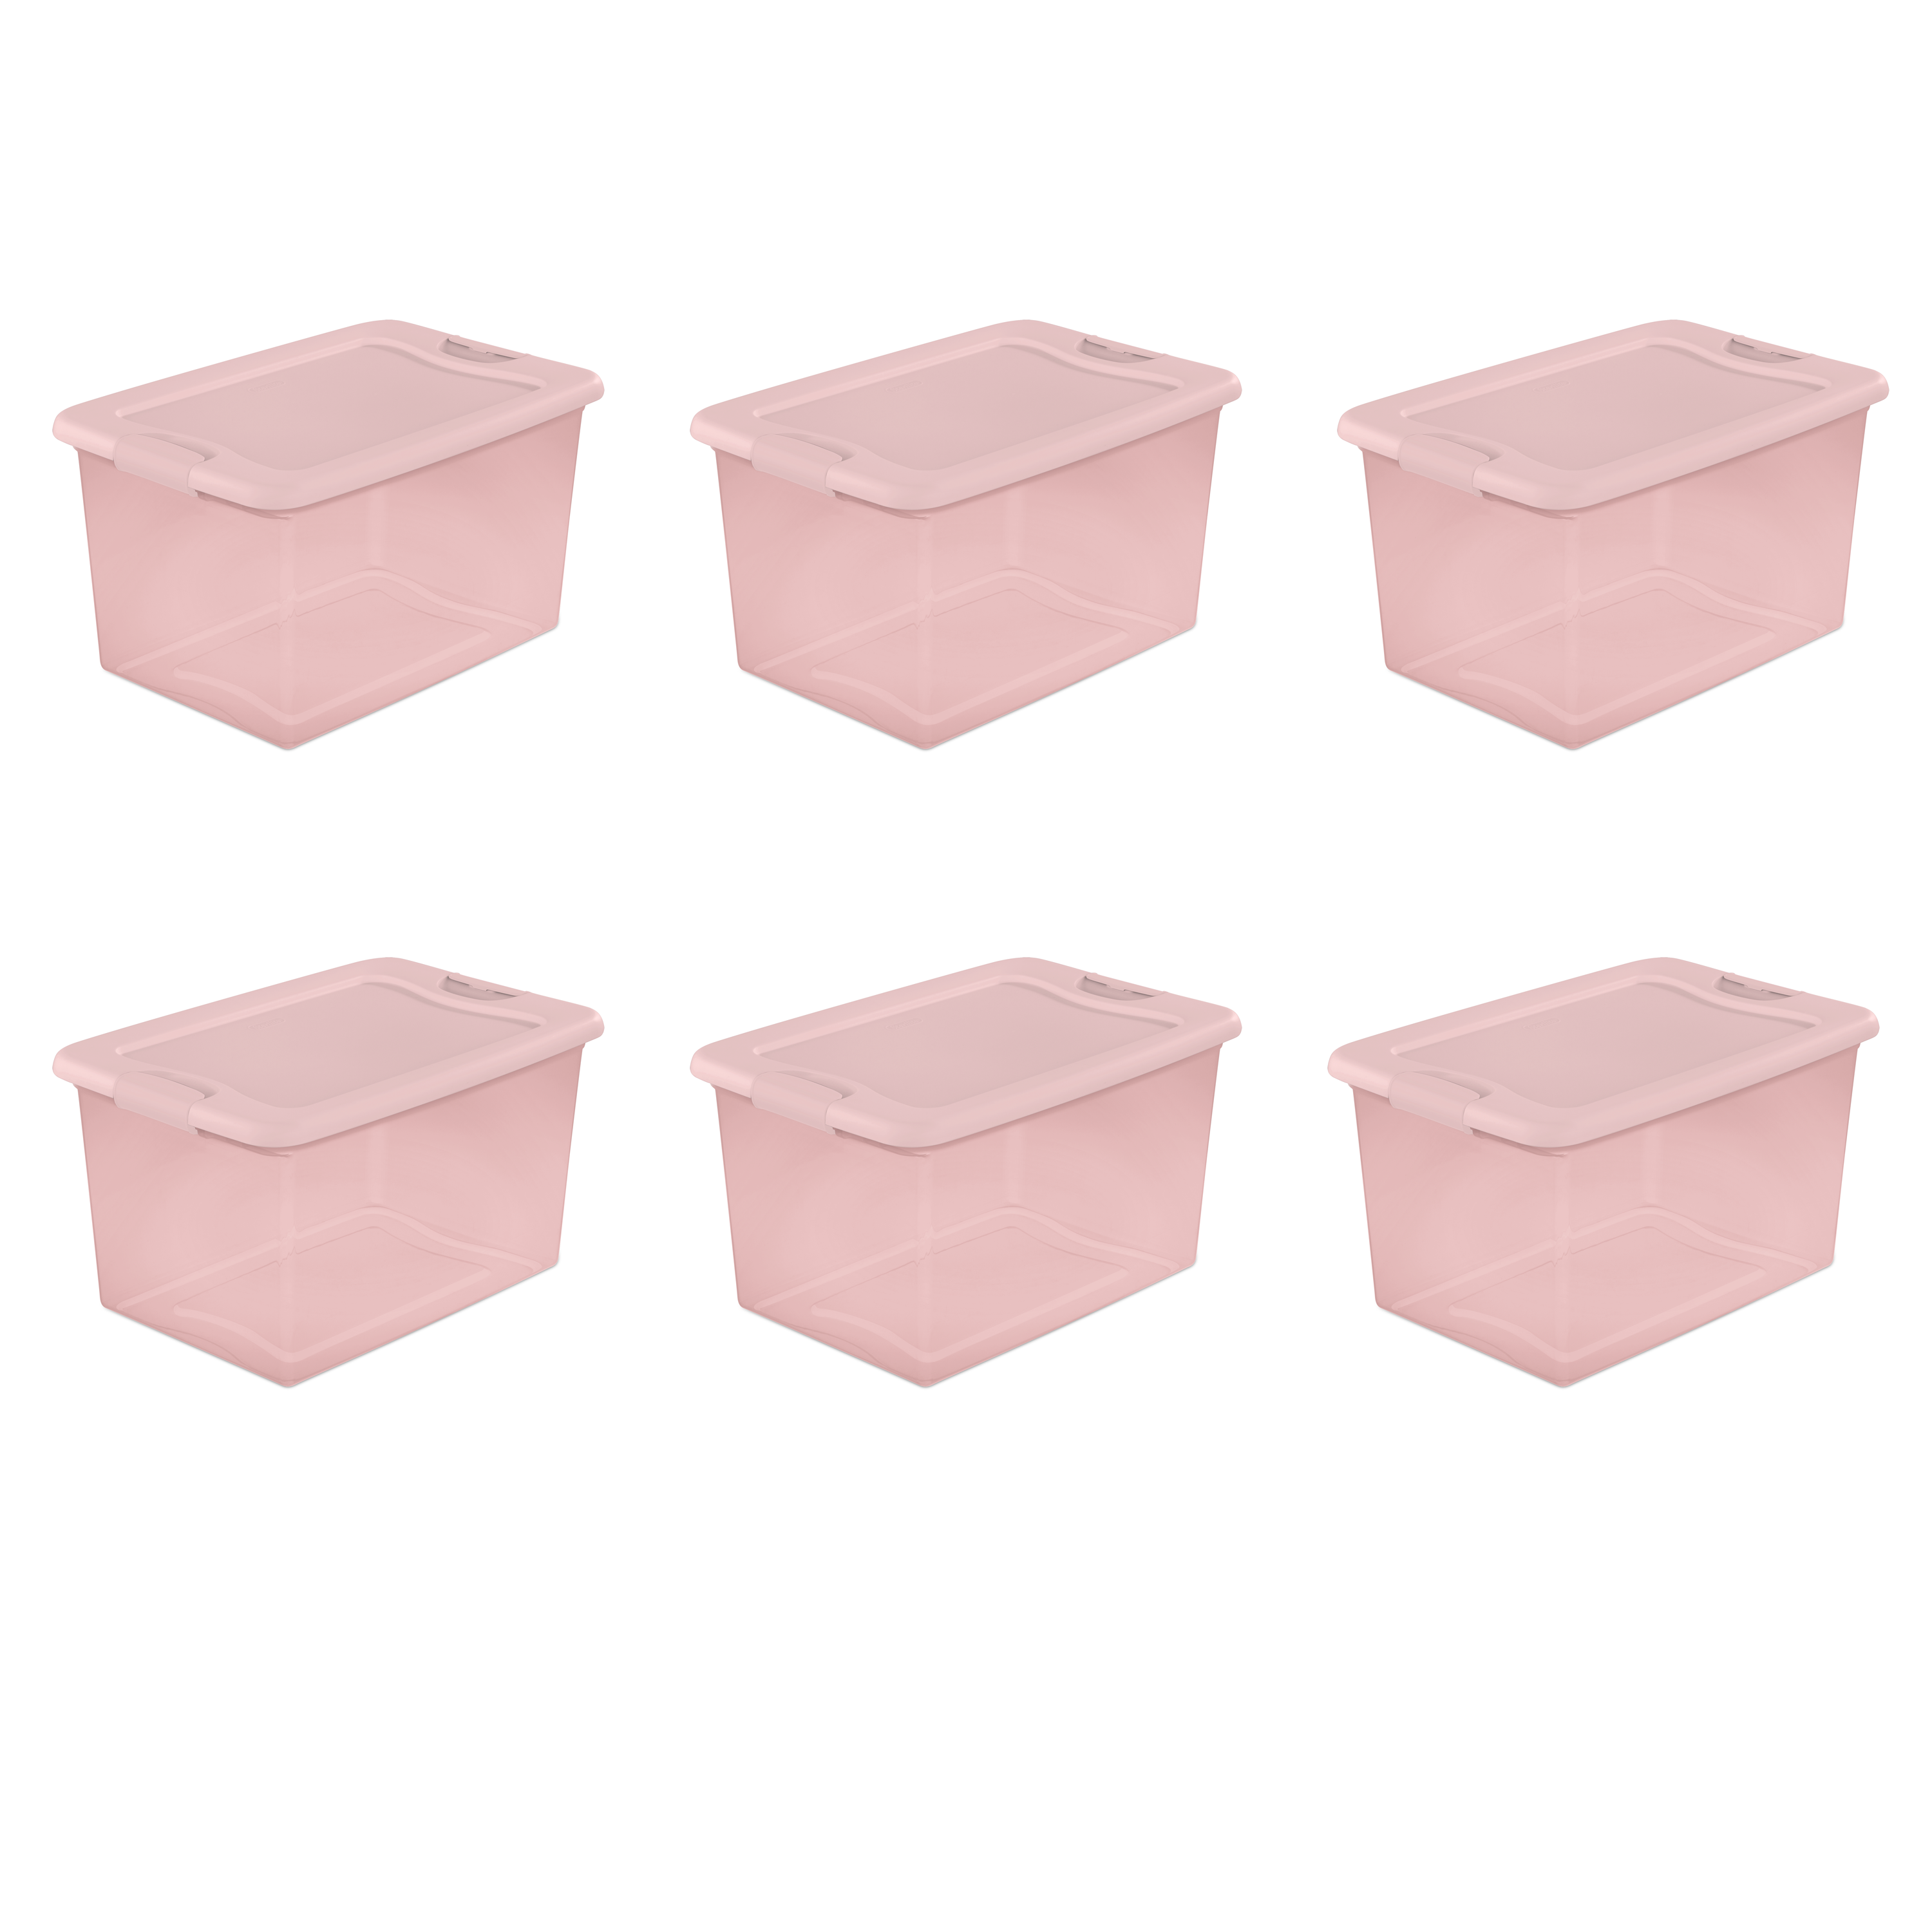 Sterilite 64 Qt. Latching Box Plastic, Blush Pink Tint, Set of 6 - image 5 of 5